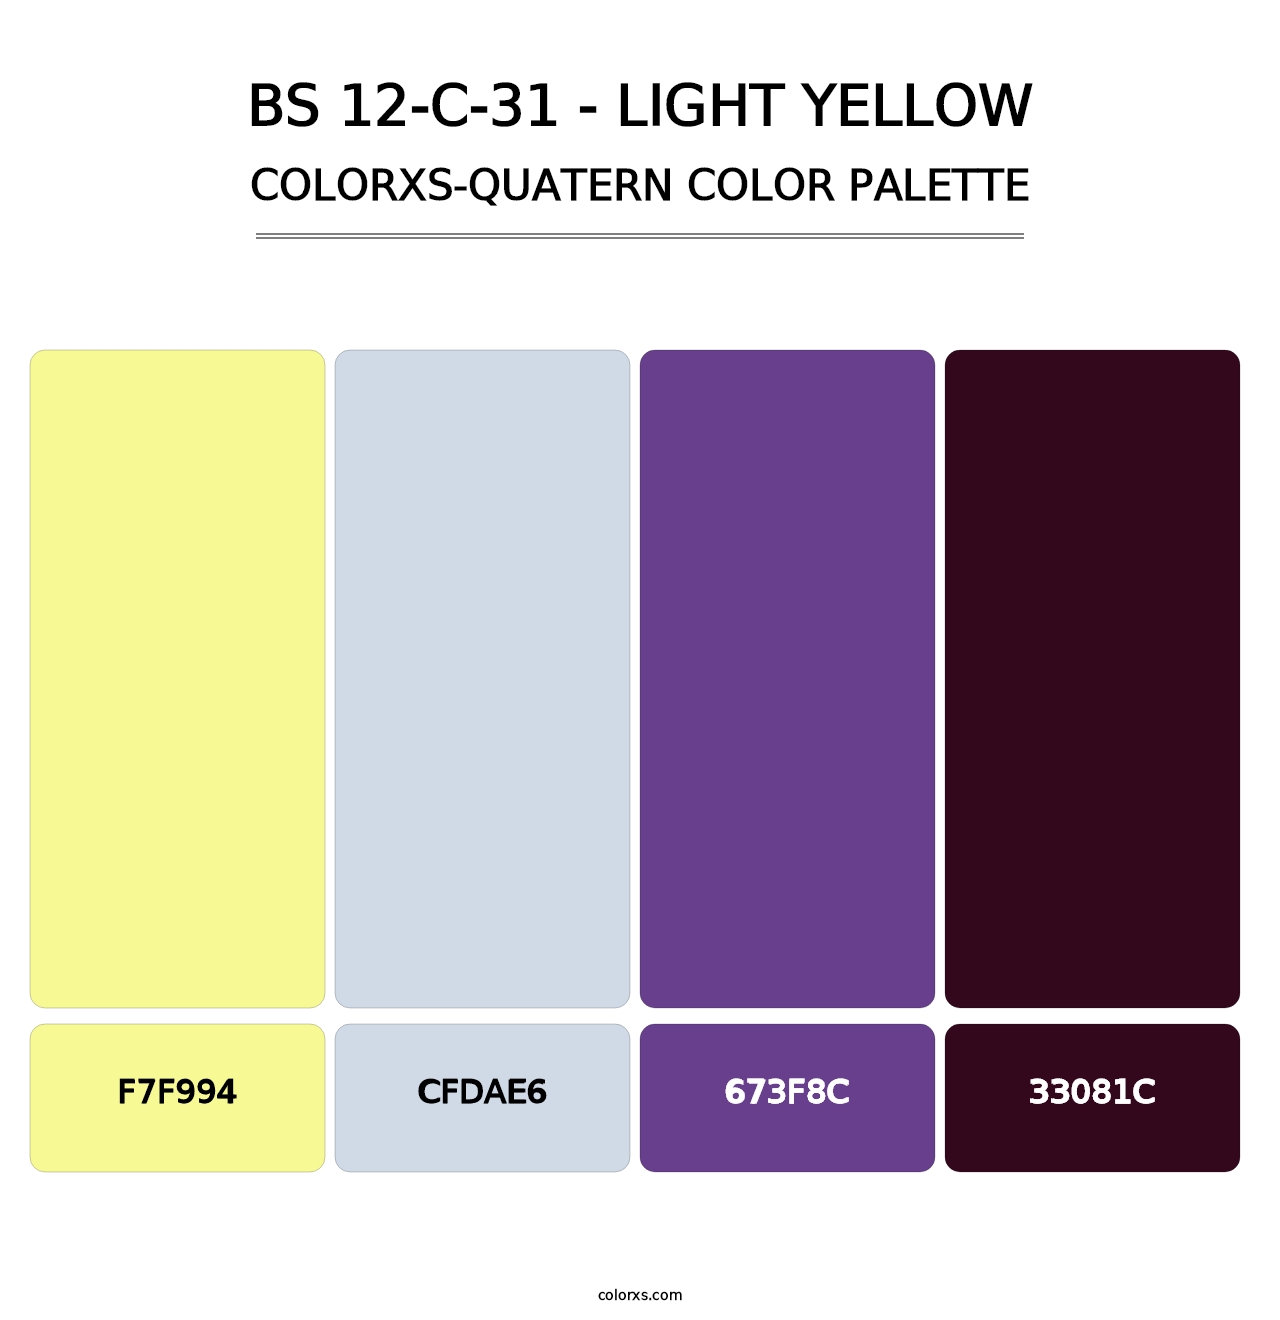 BS 12-C-31 - Light Yellow - Colorxs Quatern Palette